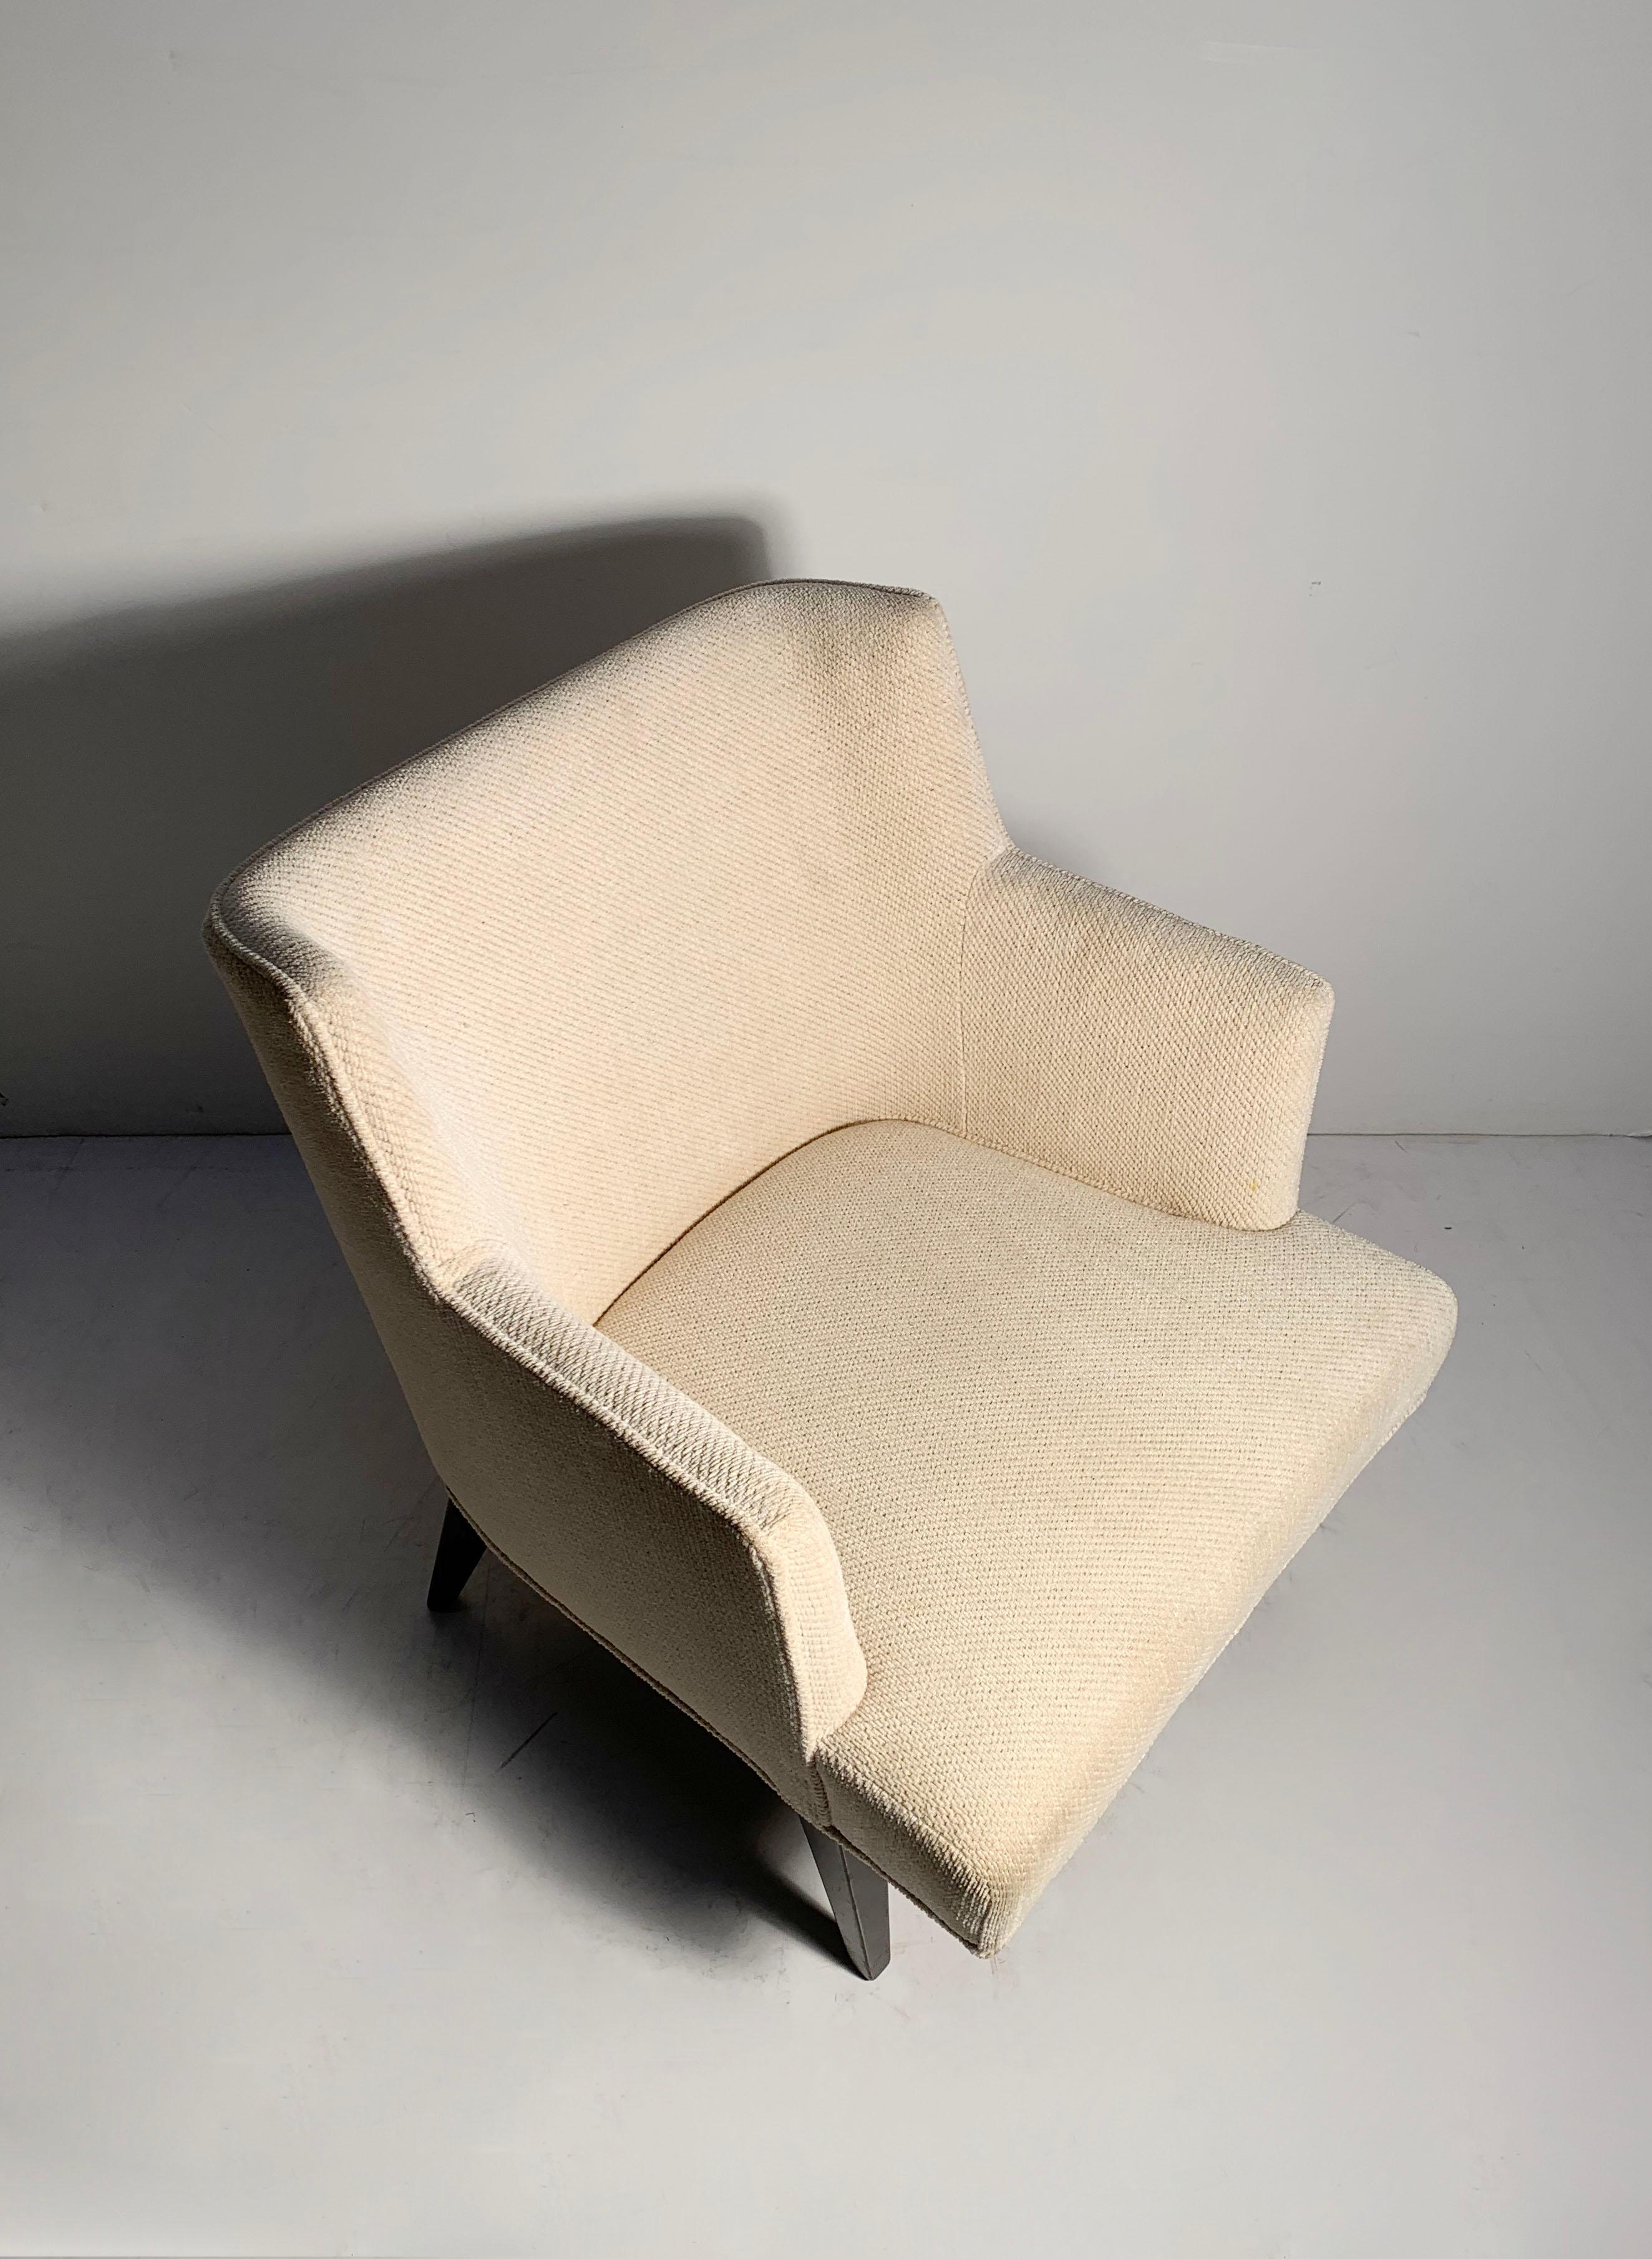 20th Century Edward Wormley Lounge Chair for Dunbar For Sale